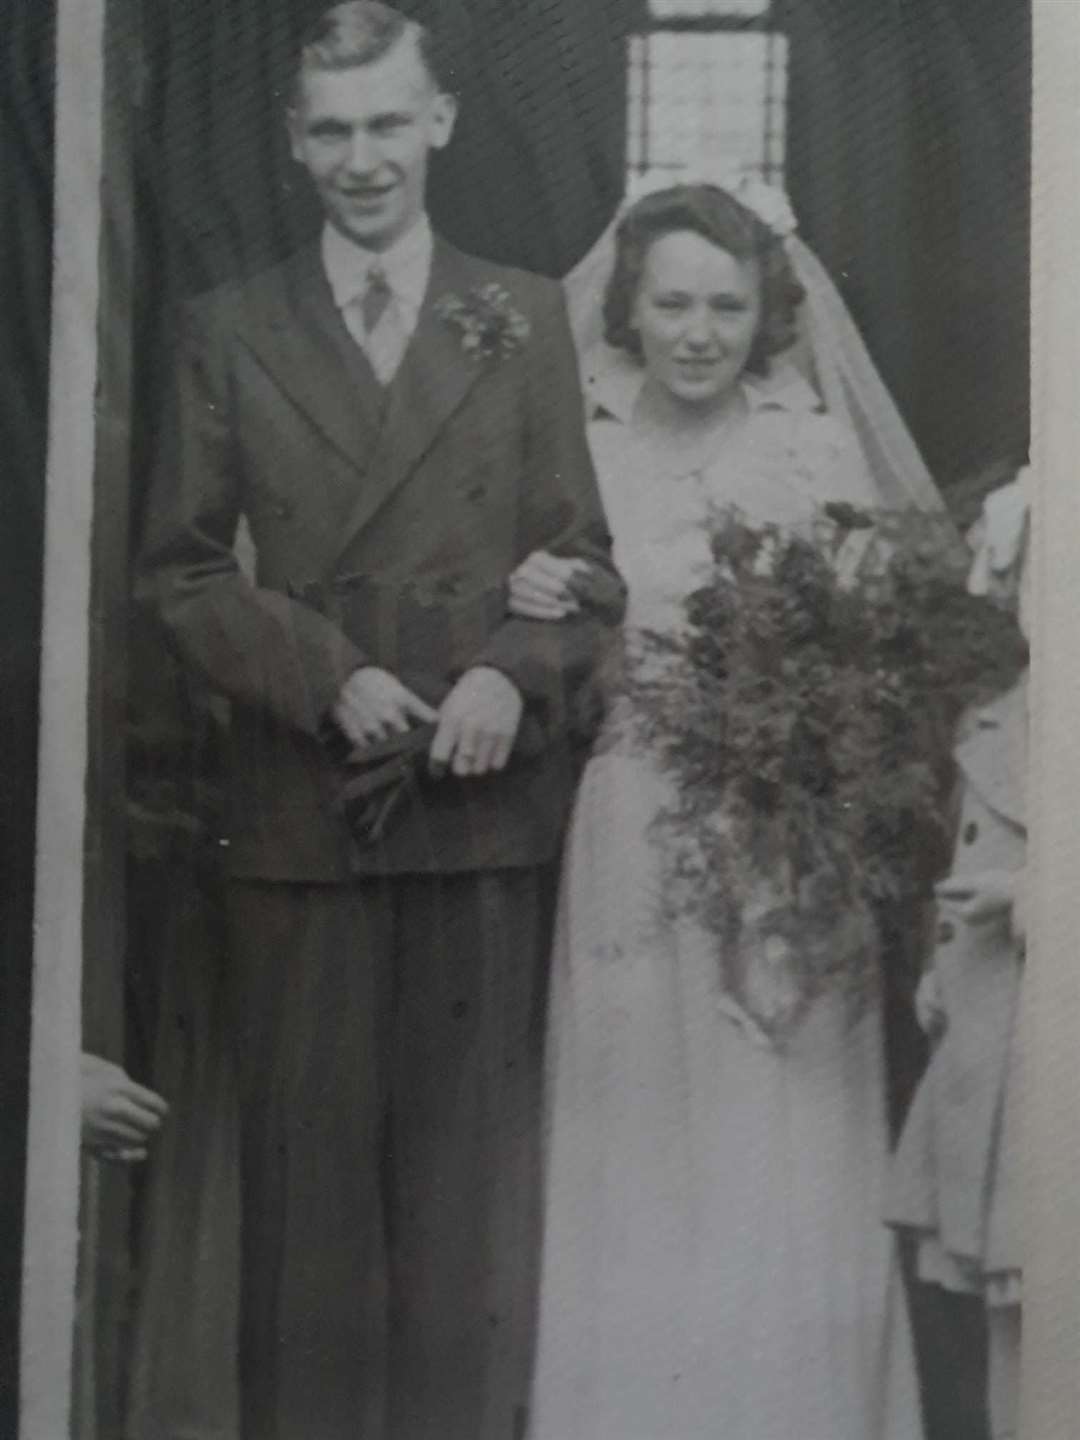 Doris married her husband Lesley in 1943